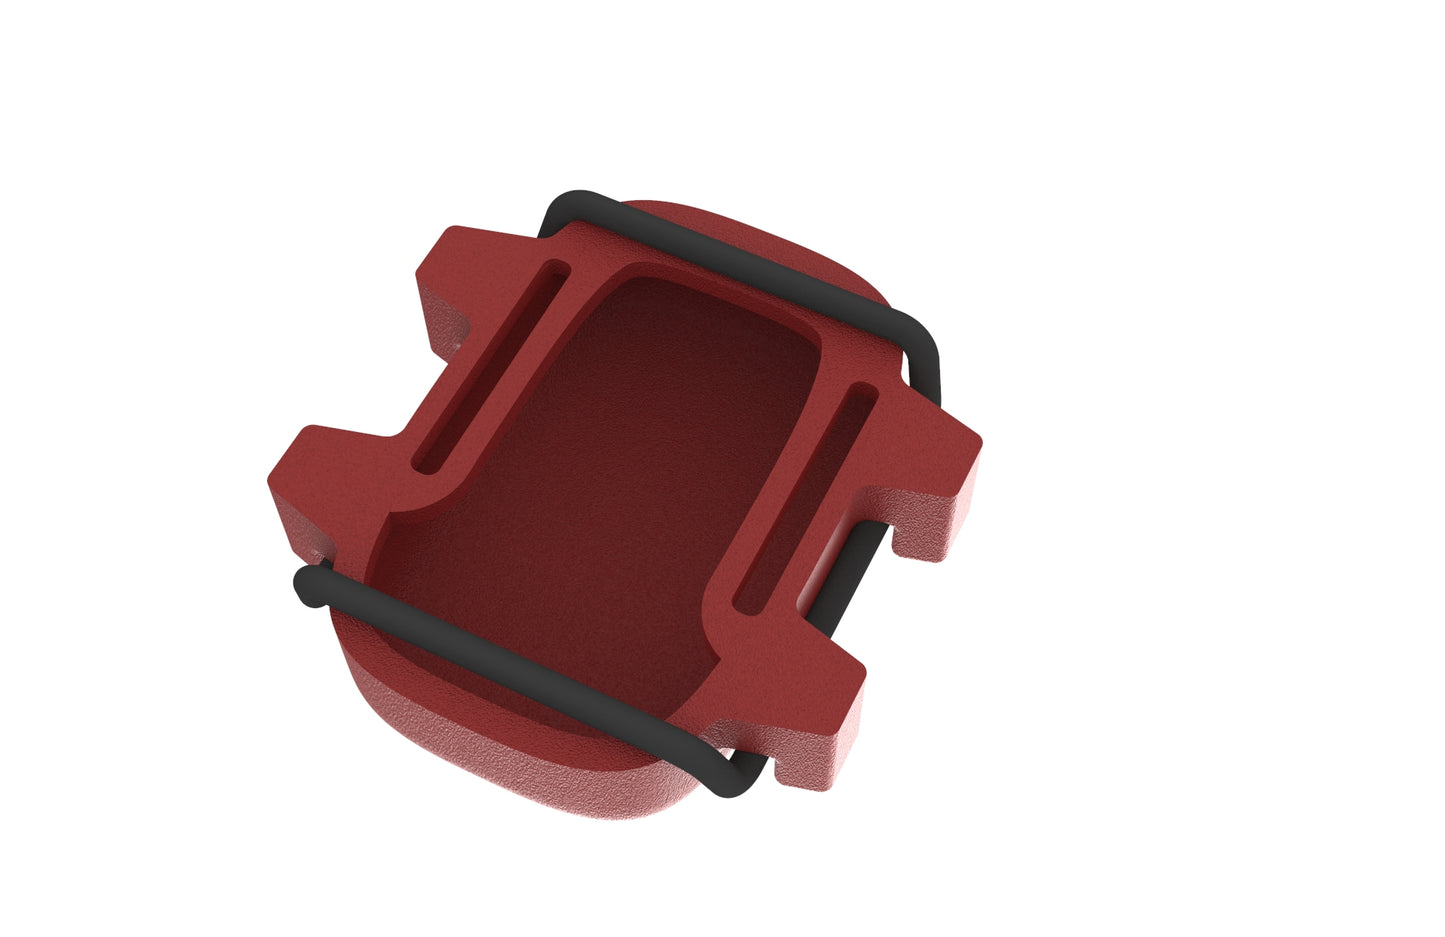 3d Printed tripL6 Rubber Transponder Mount and o-ring Strap – Fits Mylaps ProChip FLEX